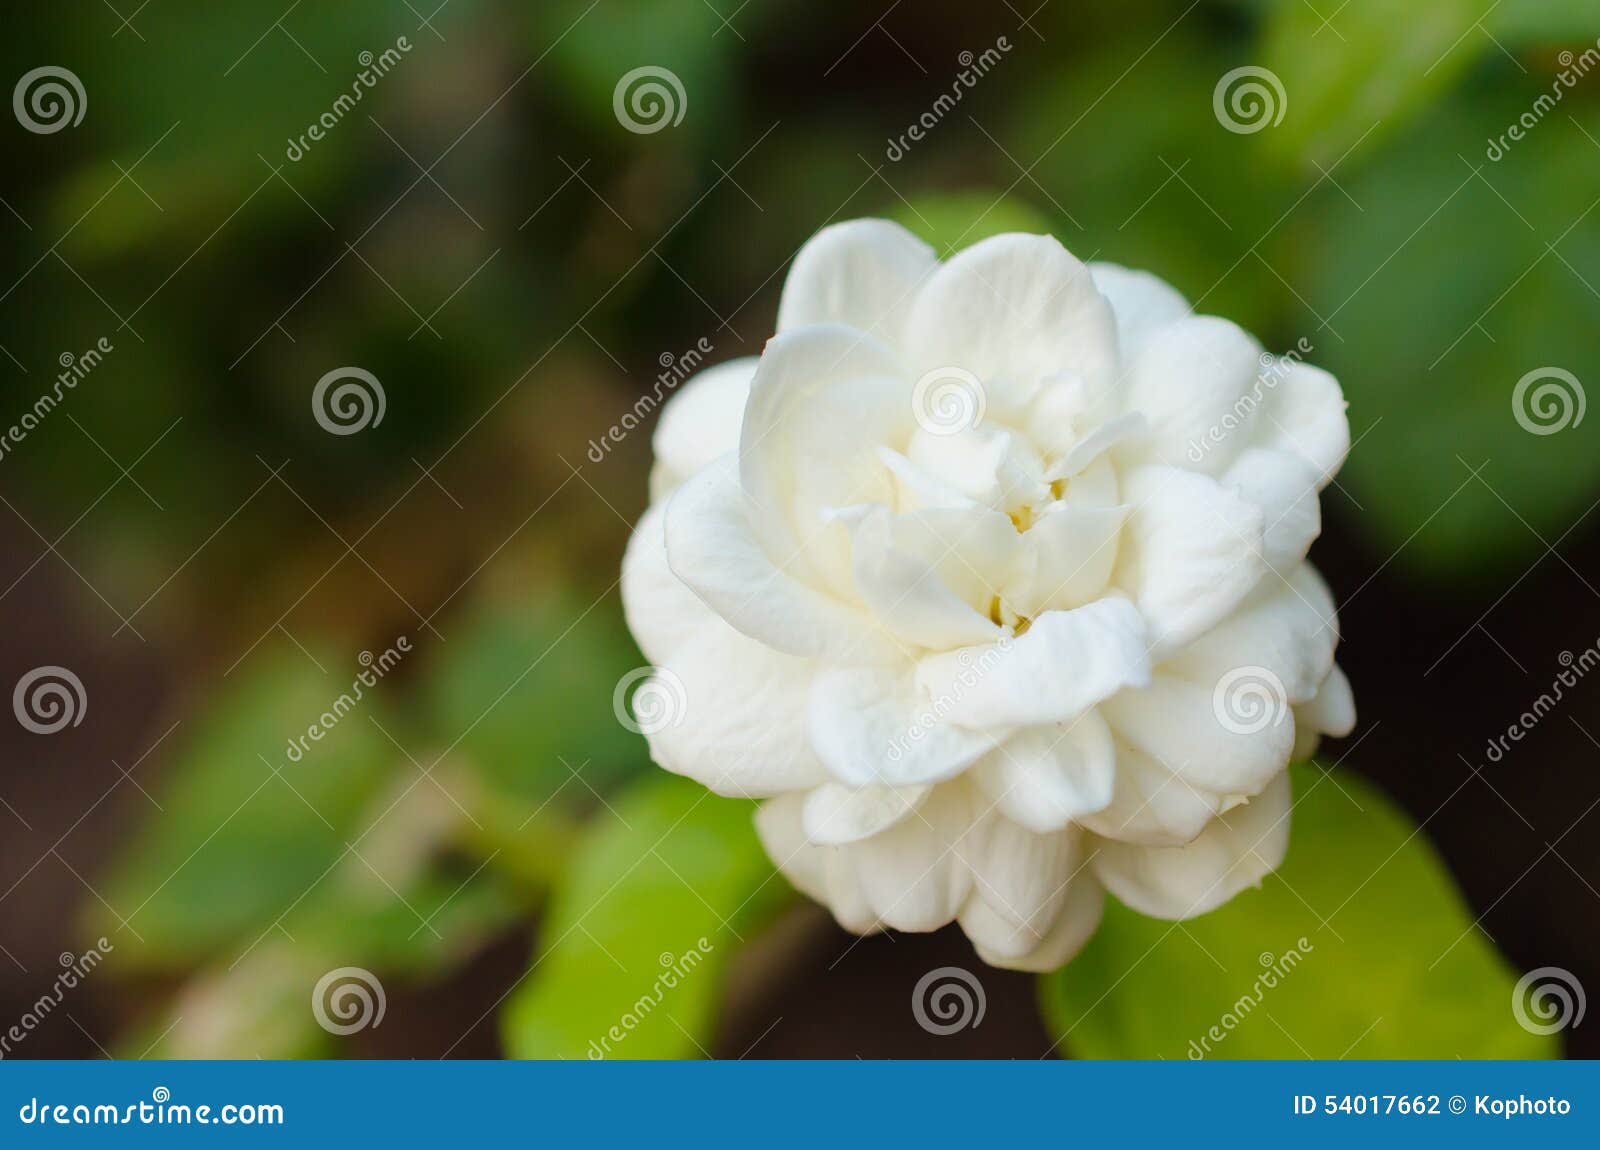 gardenia jasminoides flower